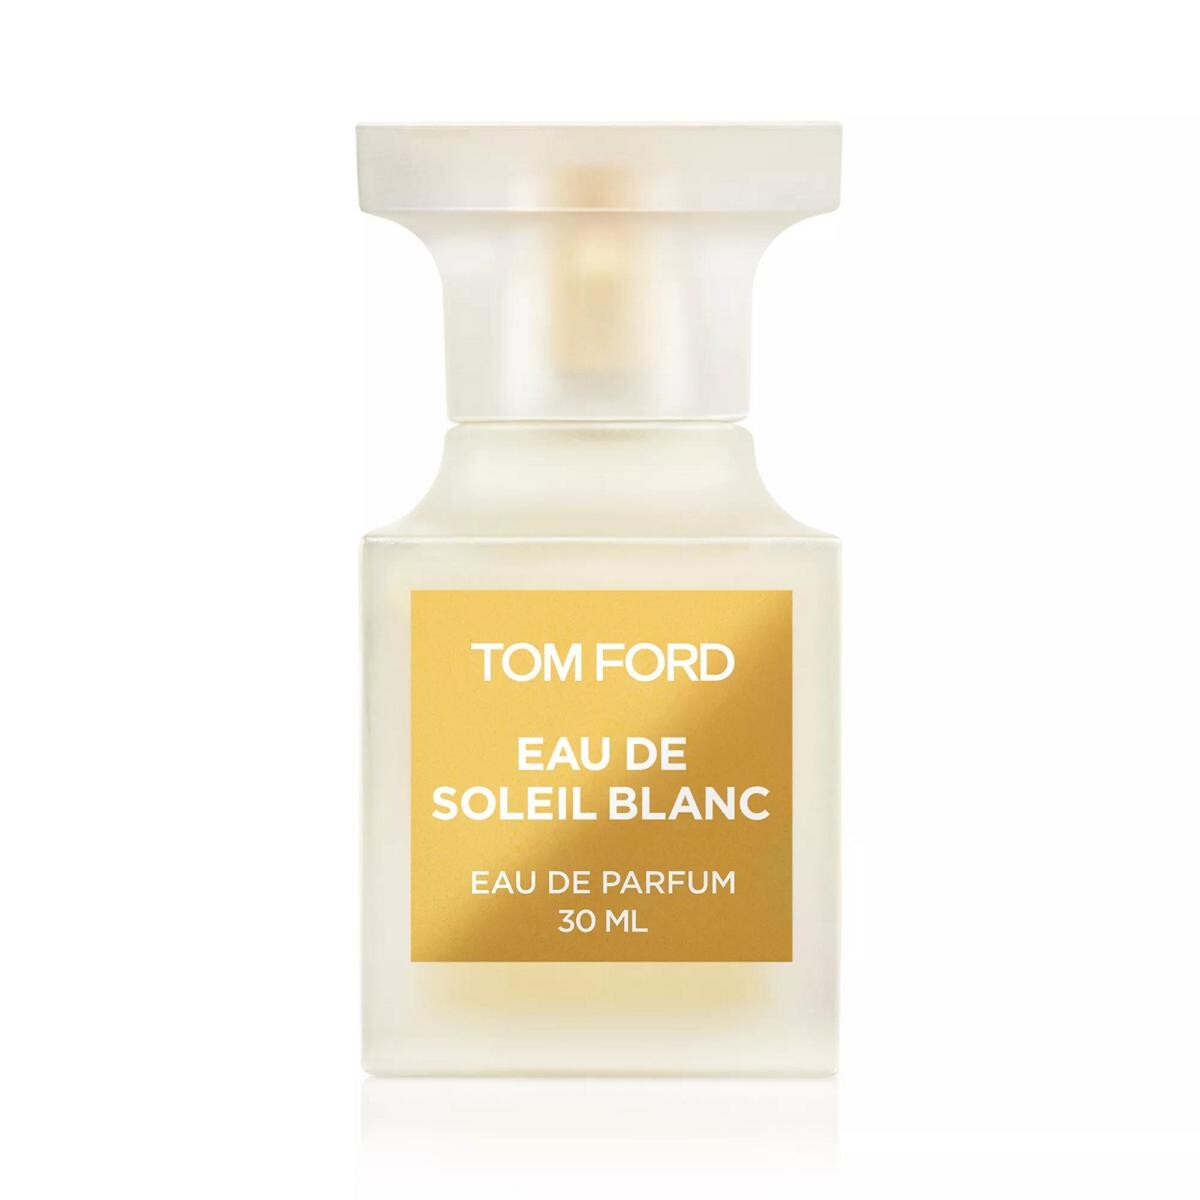 Luxus Parfum Tom Ford Eau De Soleil Blanc bestellen